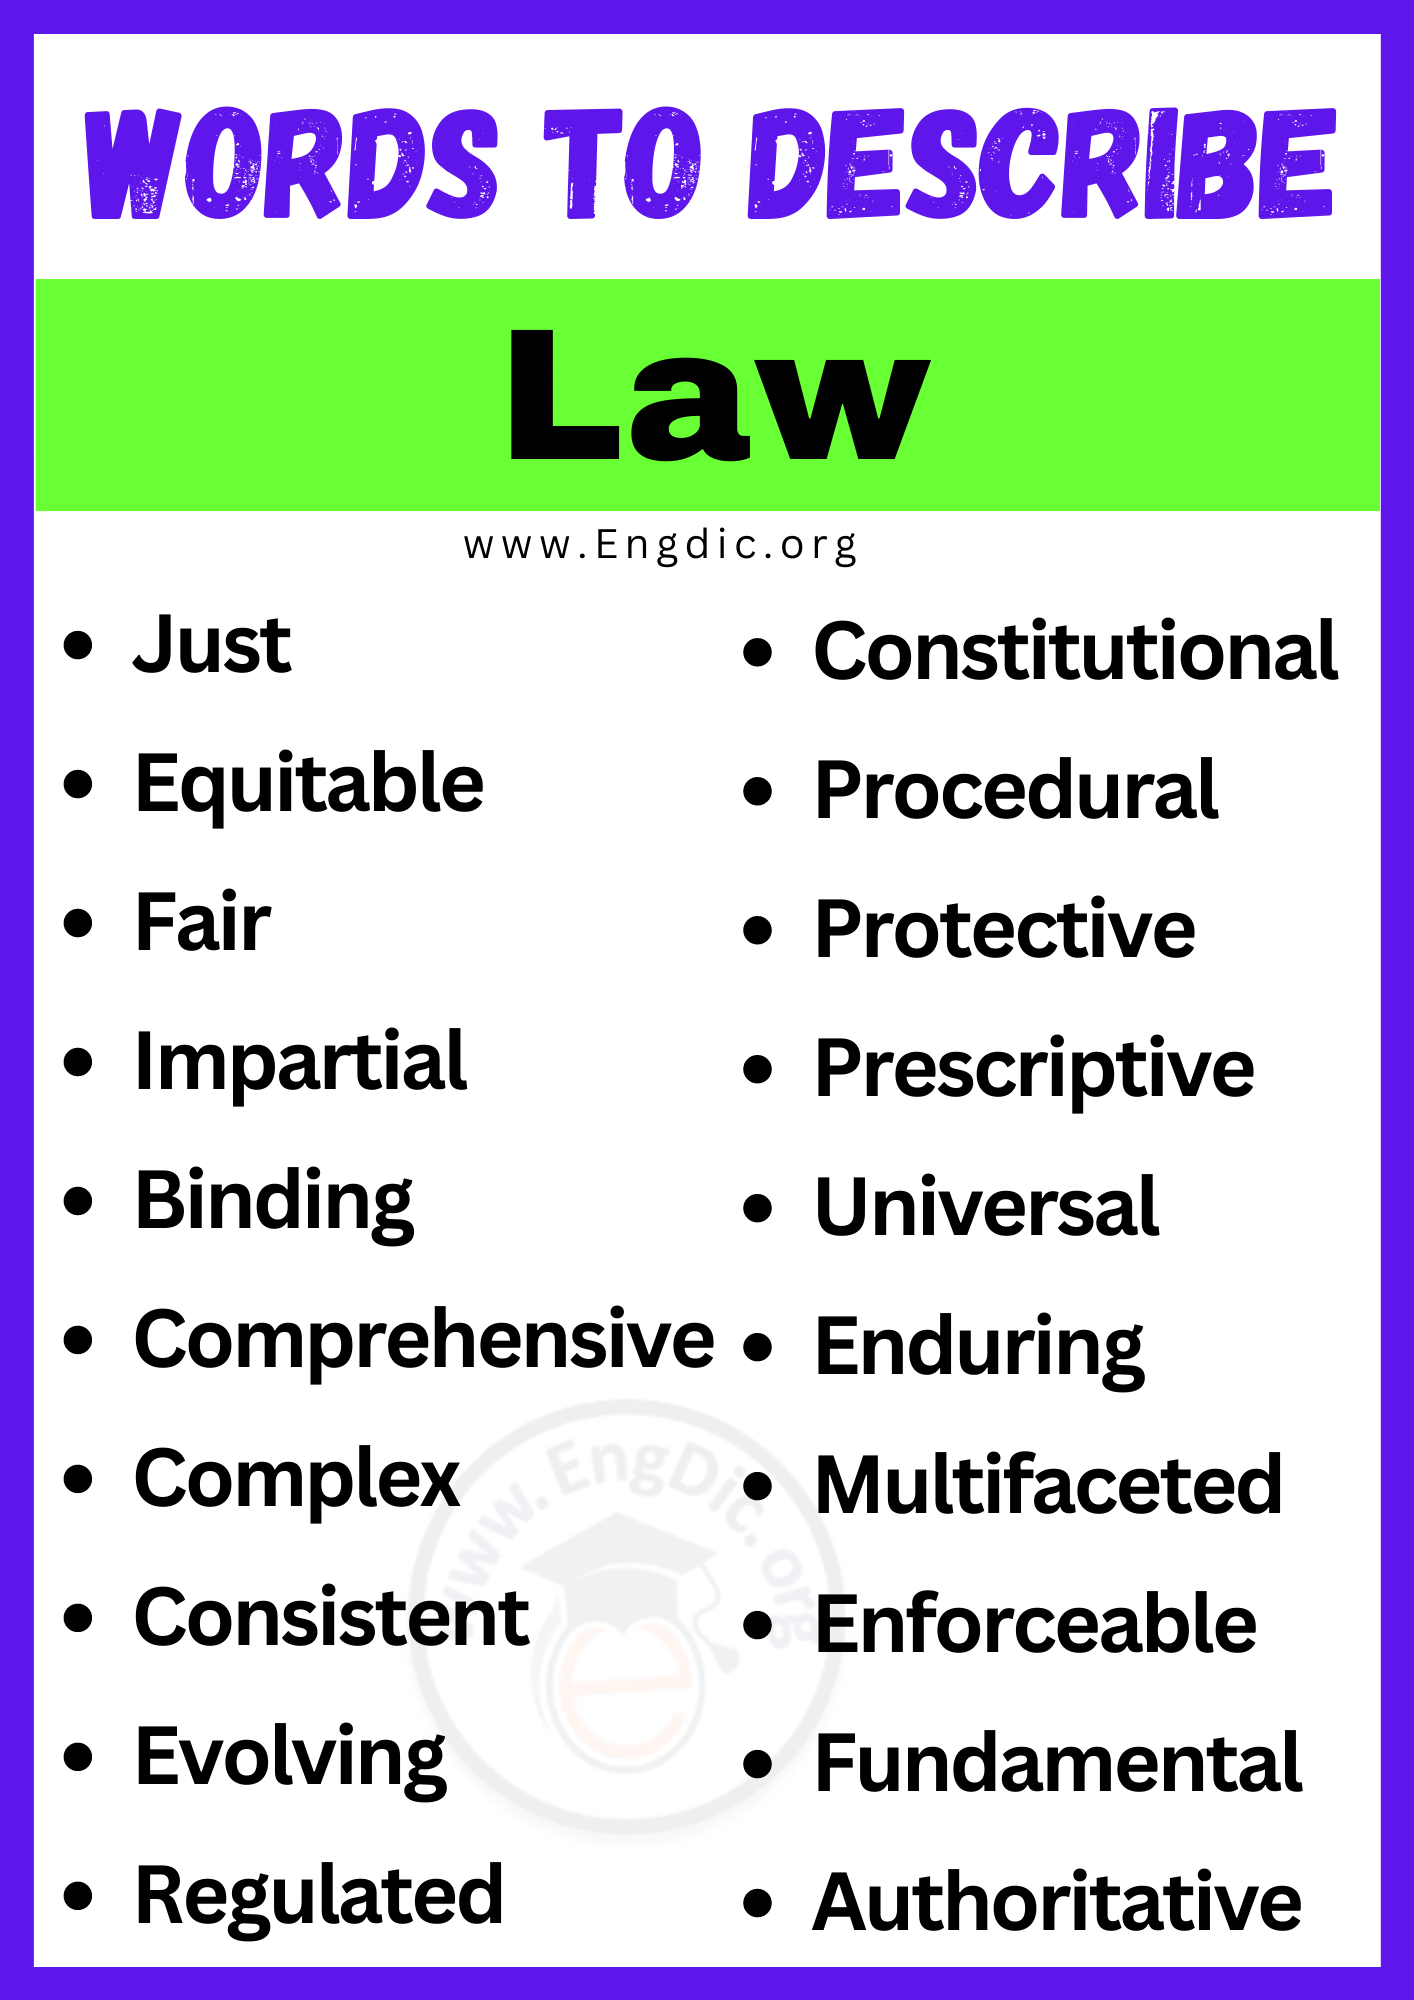 Words to Describe Law